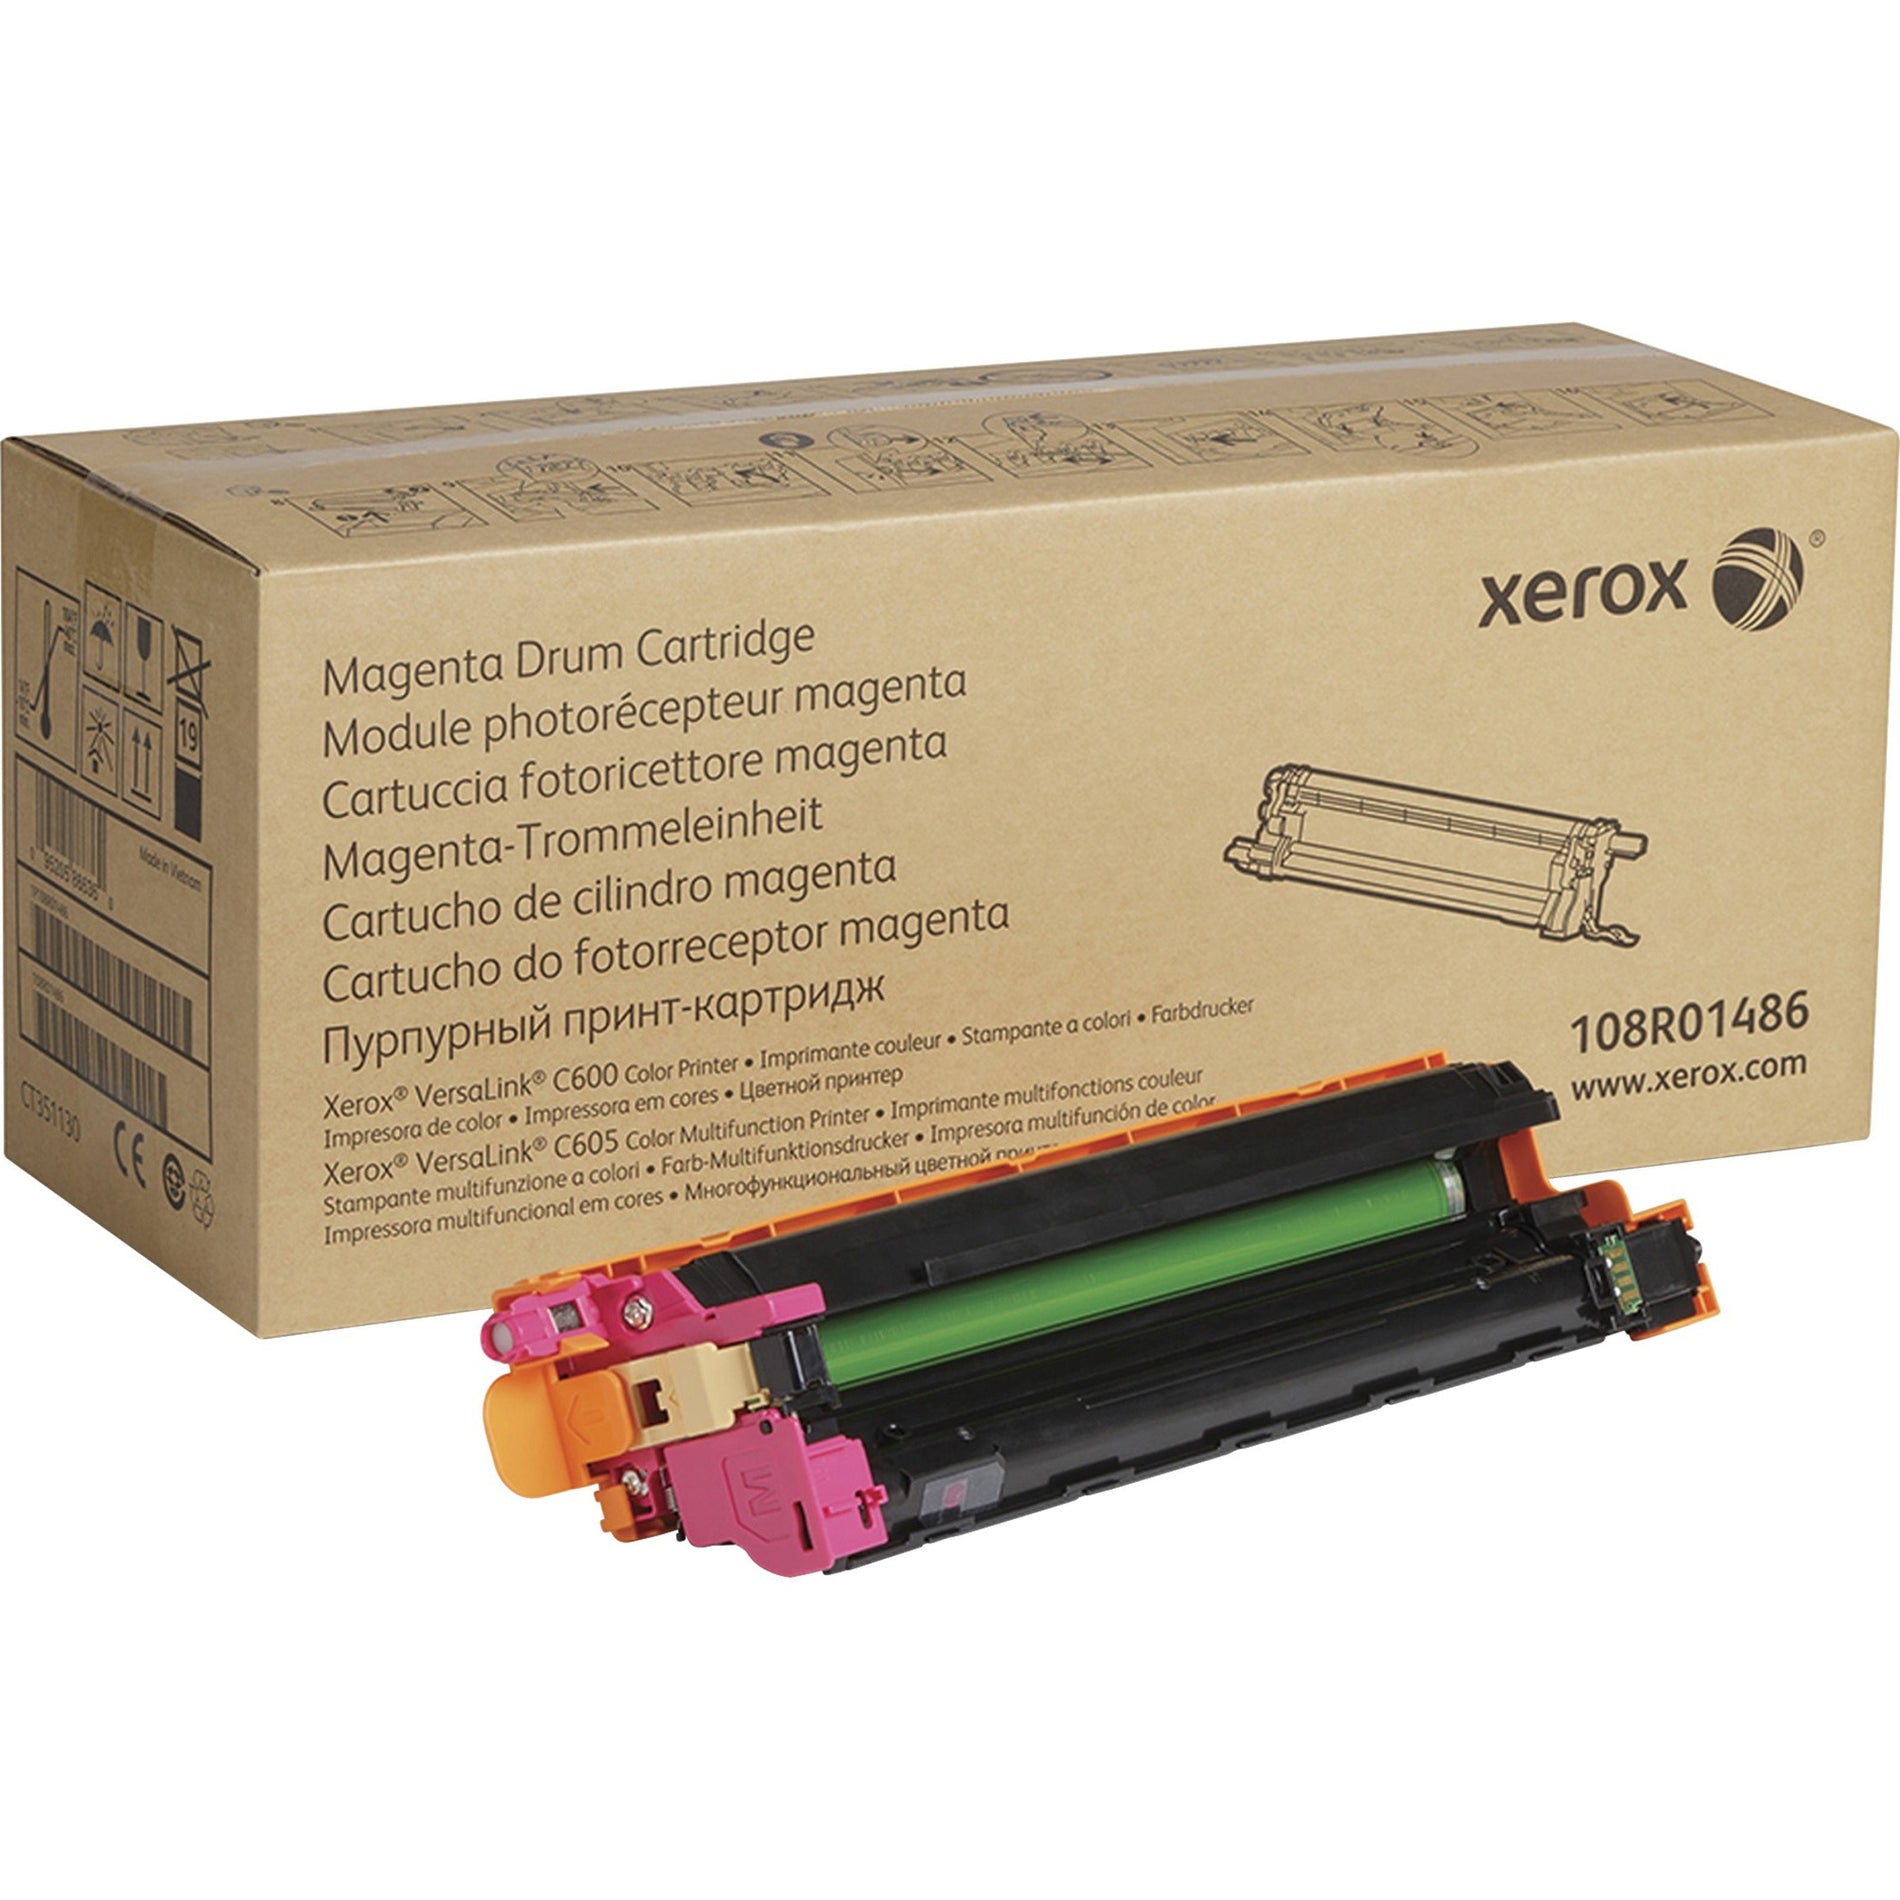 Xerox 108R01486 VersaLink C600/C605 Drum Cartridge, Magenta, 40,000 Page Yield